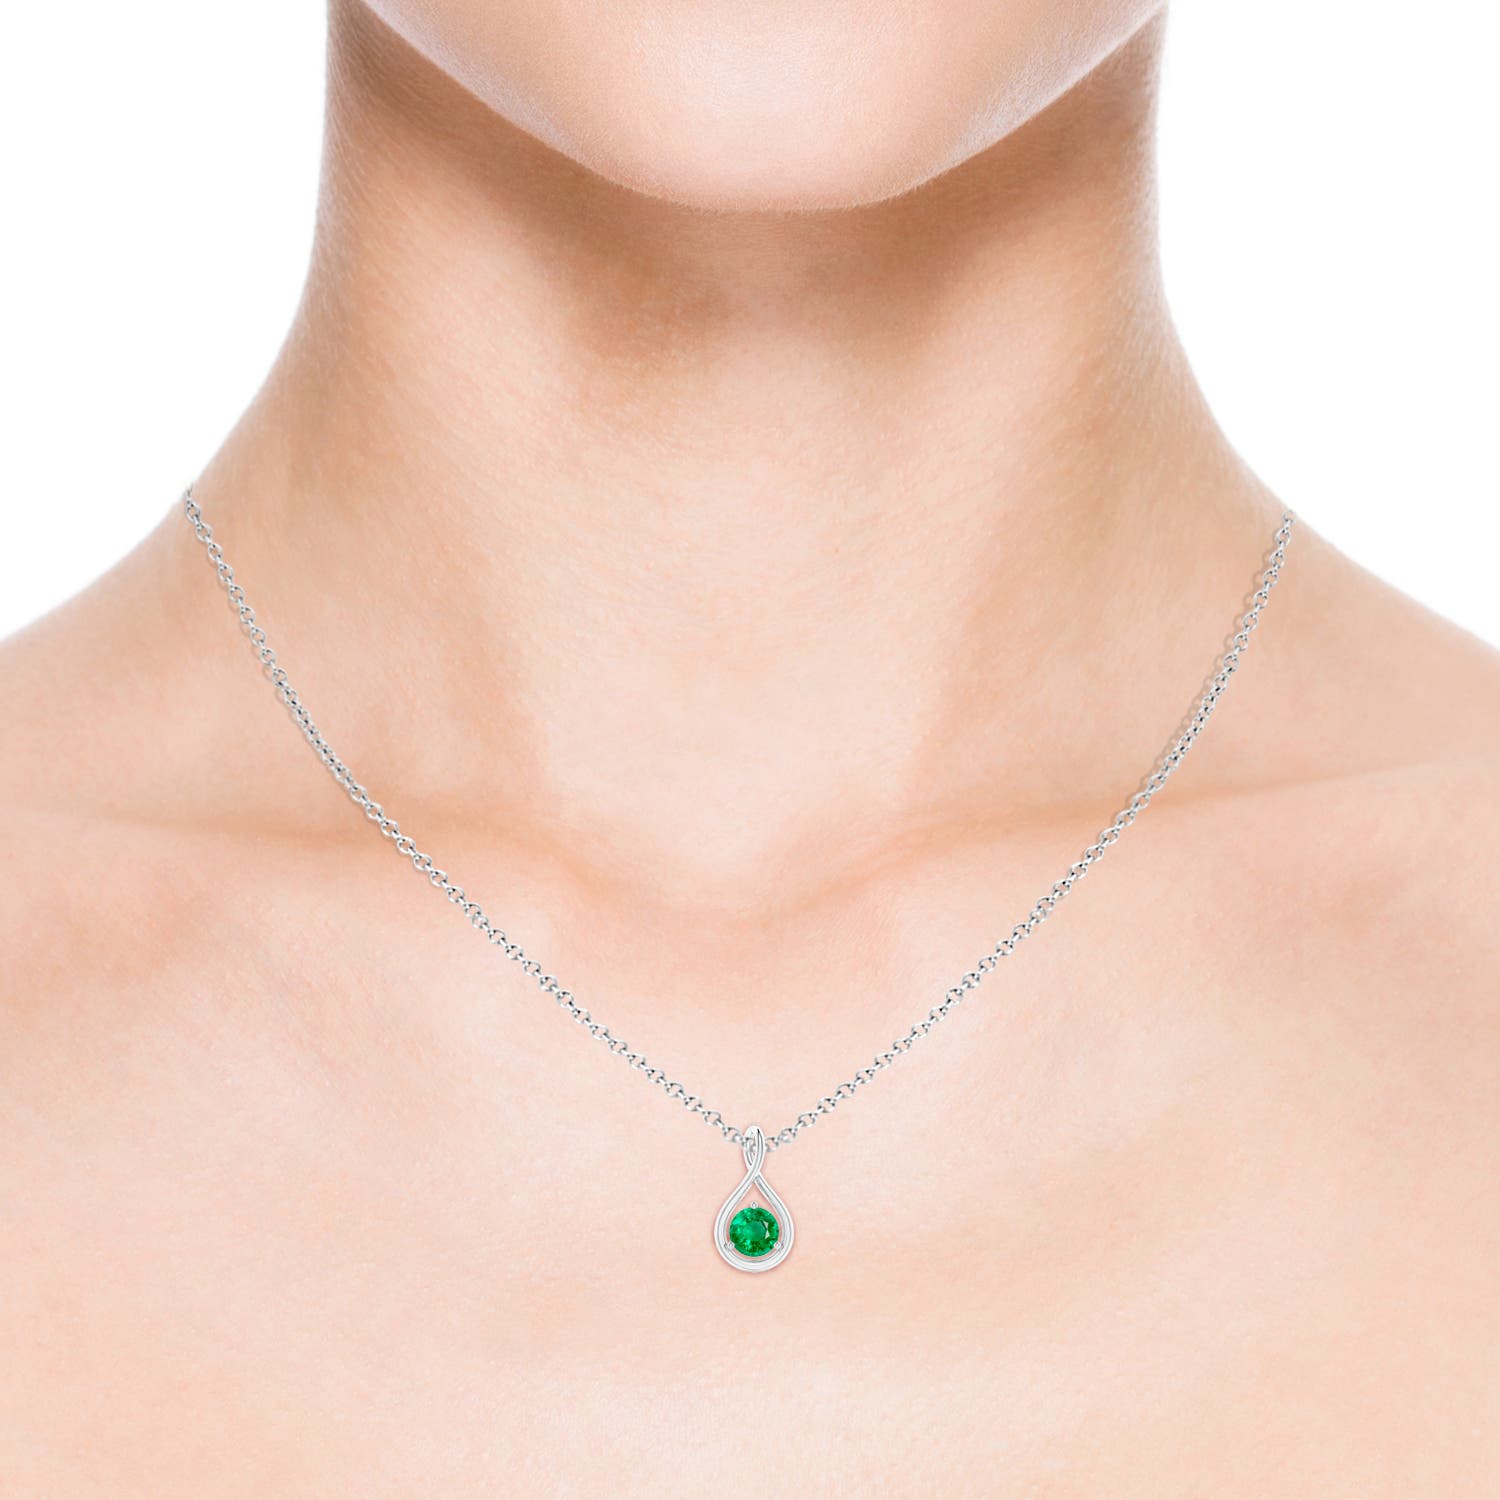 Shop Emerald Pendant Necklaces for Women | Angara